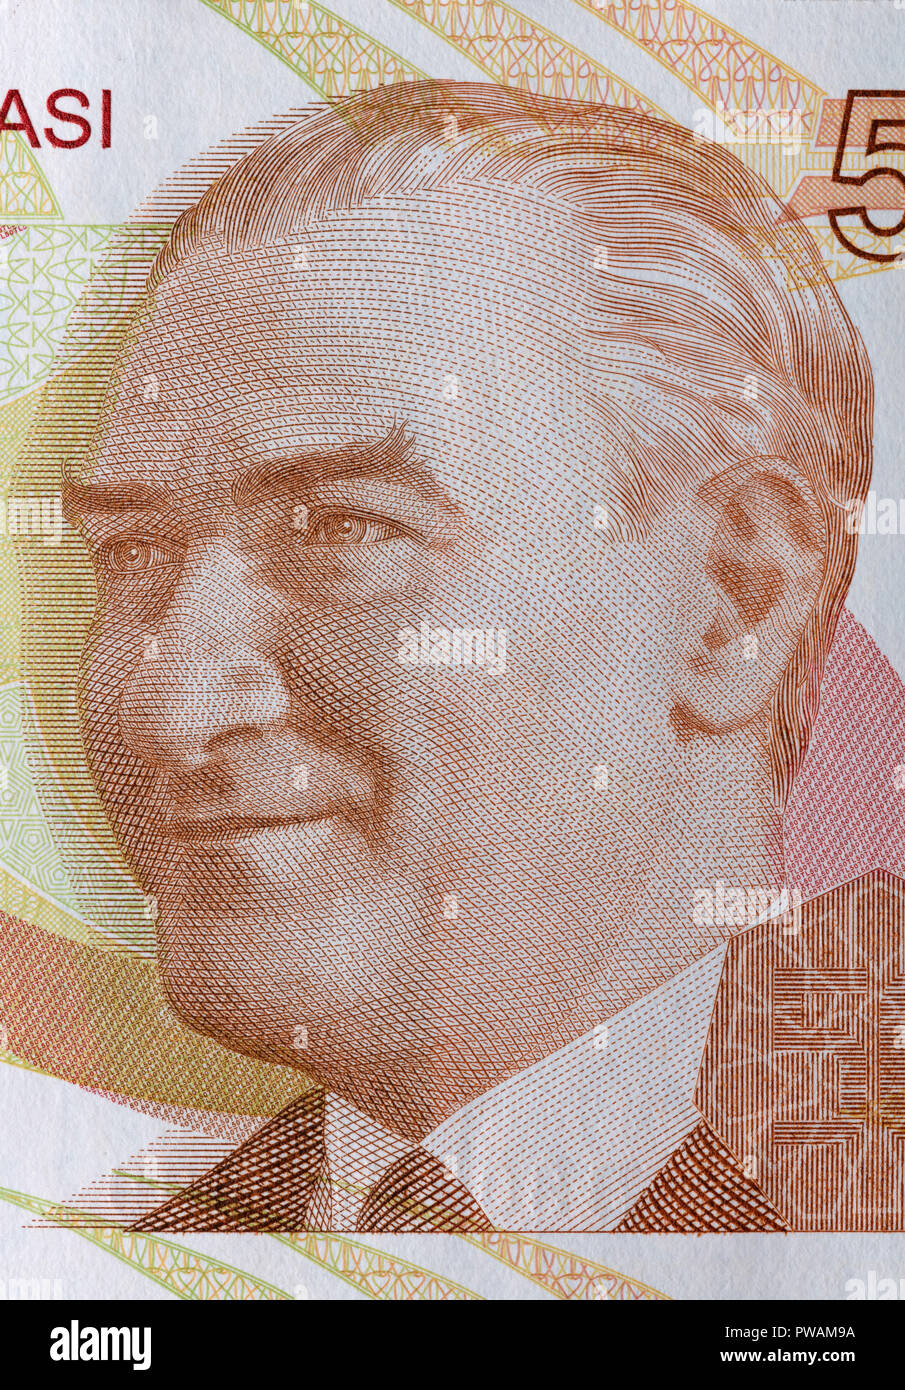 Portrait of Mustafa Kemal Ataturk from 50 lira banknote, Turkey, 2009 Stock Photo